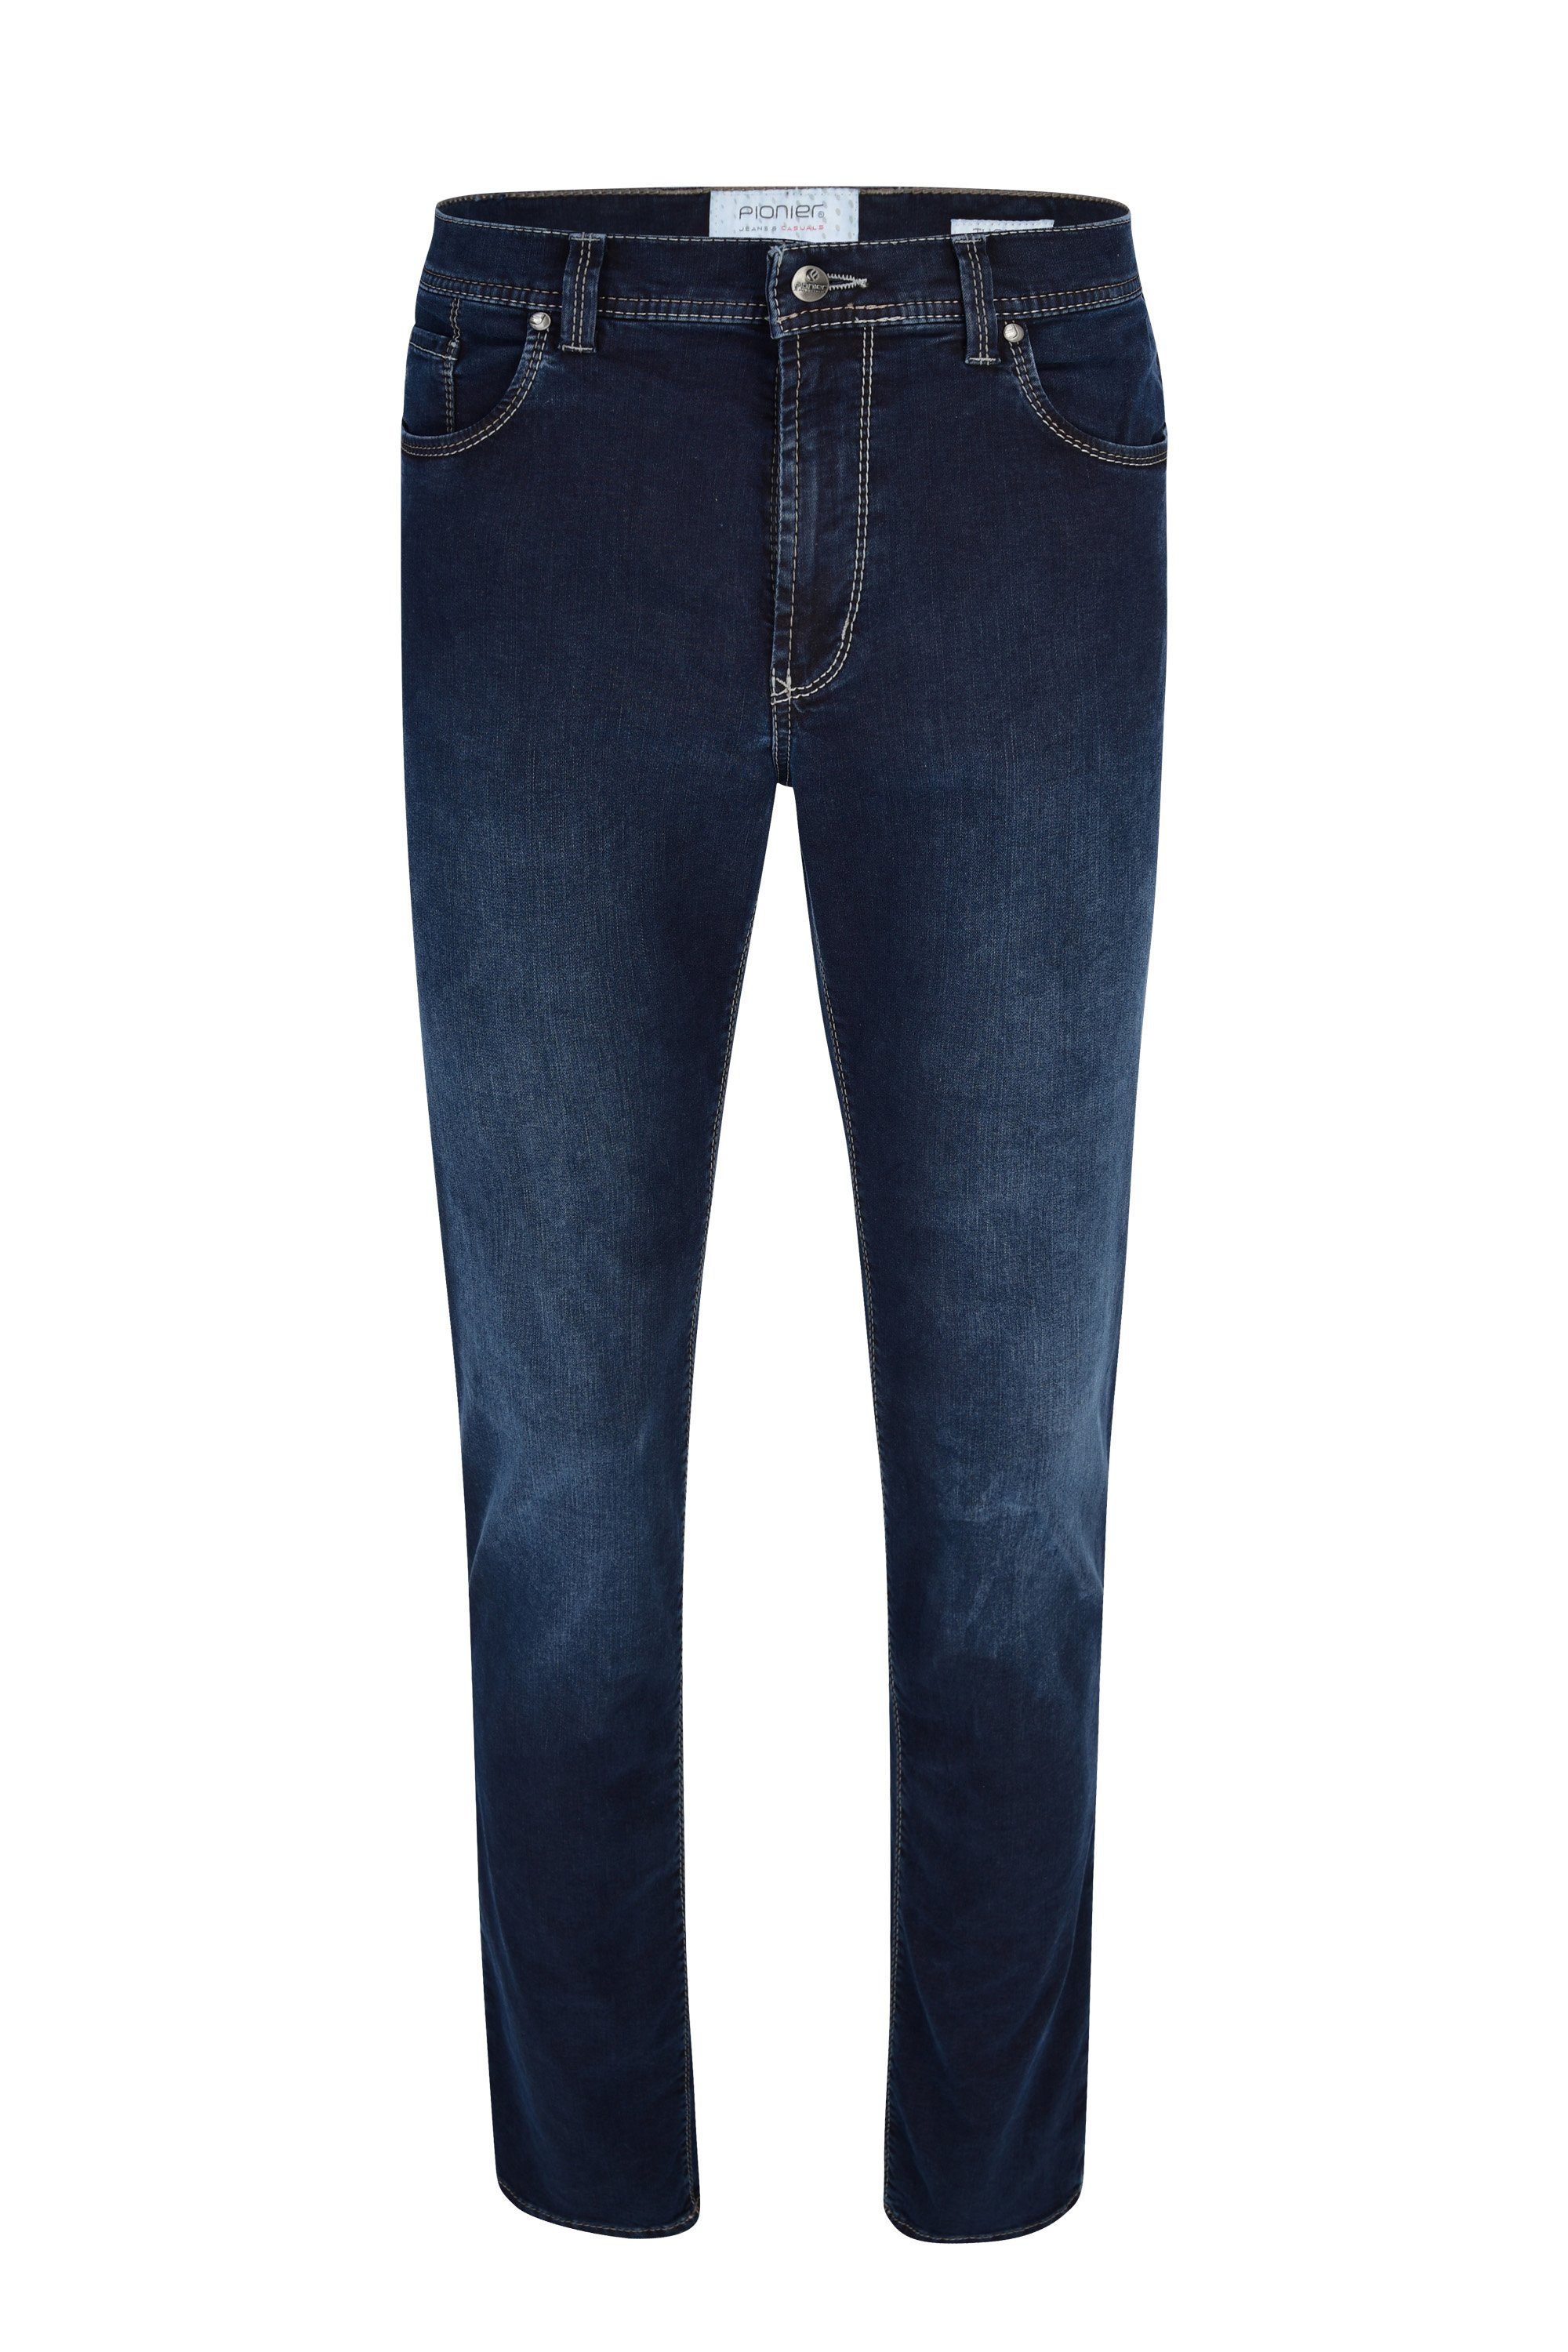 Pionier 5-Pocket-Jeans PIONIER blue 2079 dark 6101.665 THOMAS